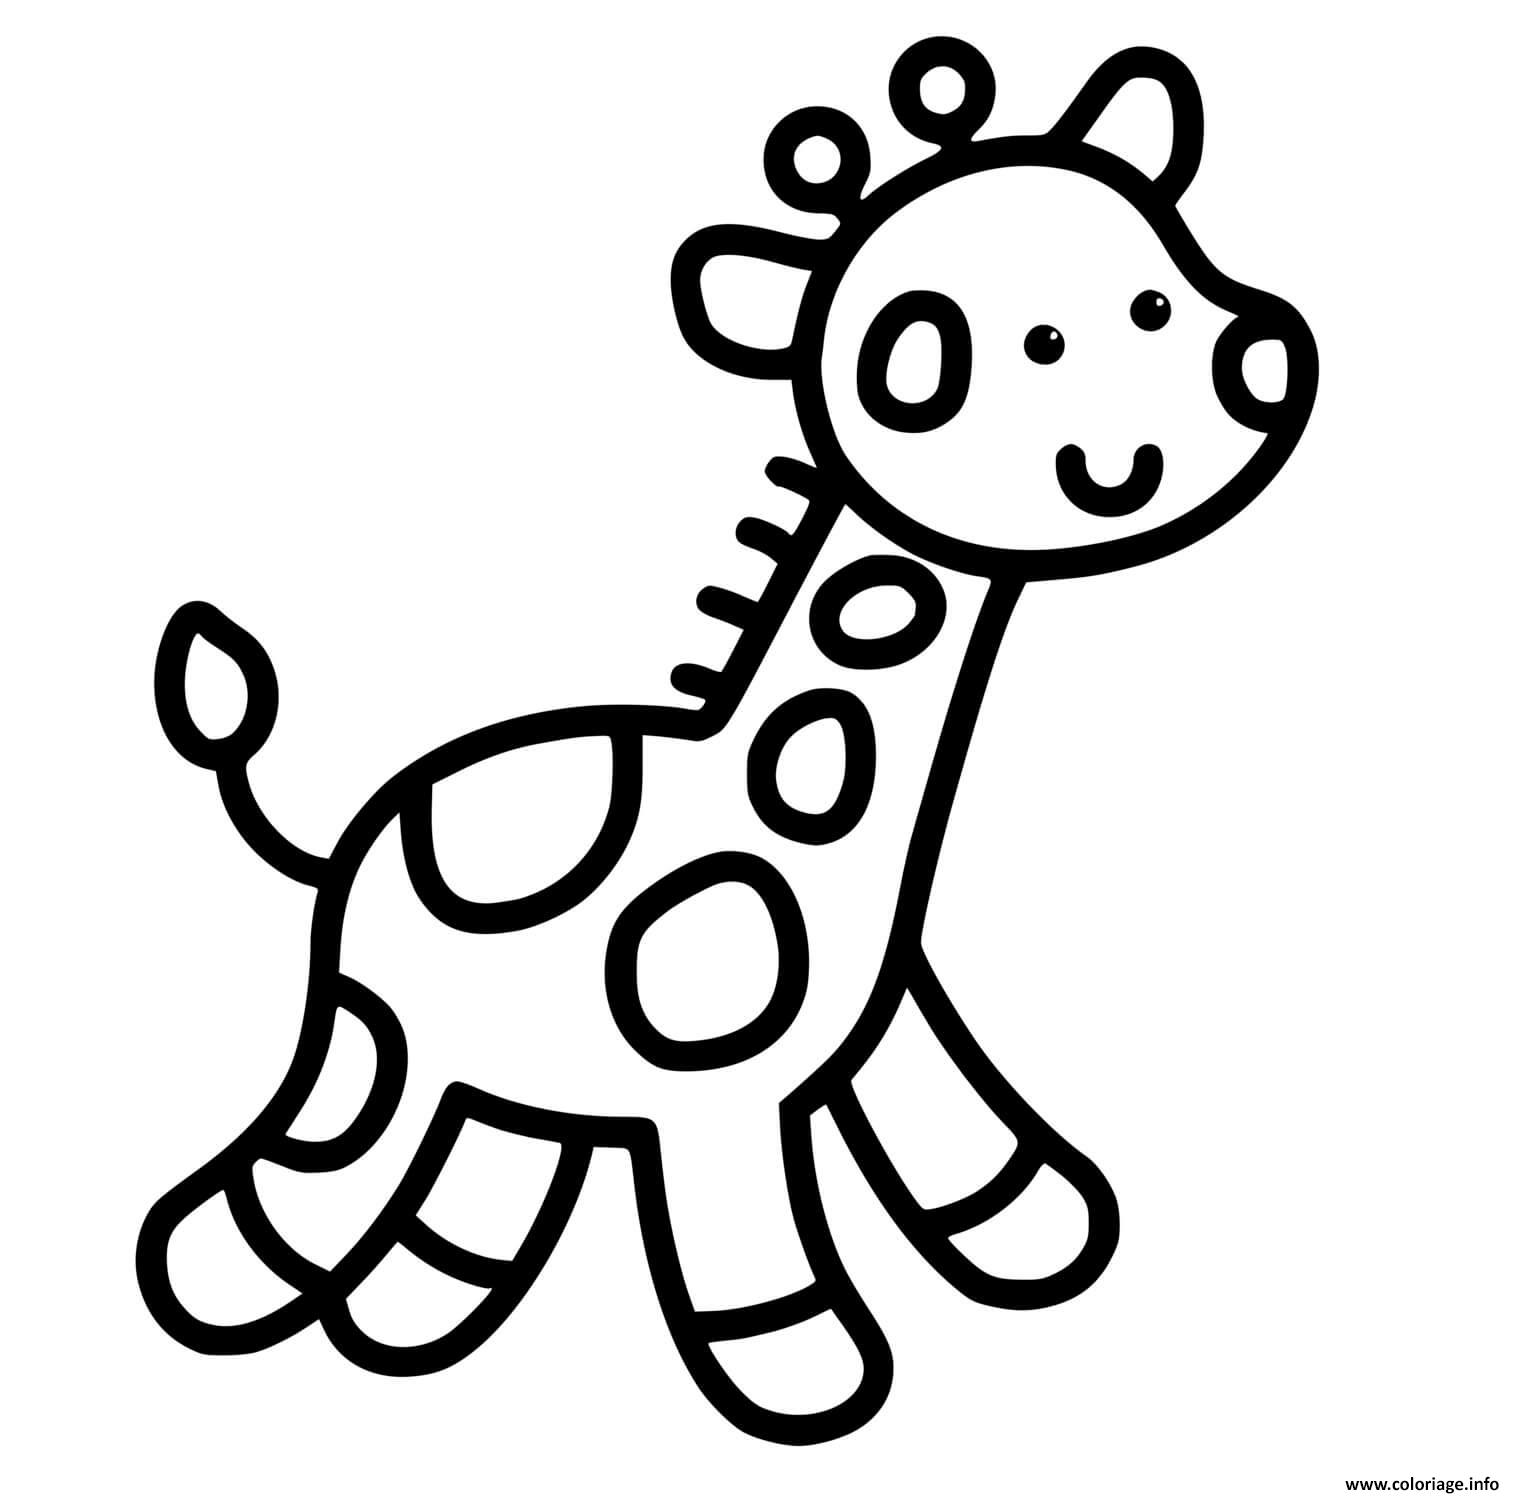 Dessin girafe maternelle bebe facile Coloriage Gratuit à Imprimer